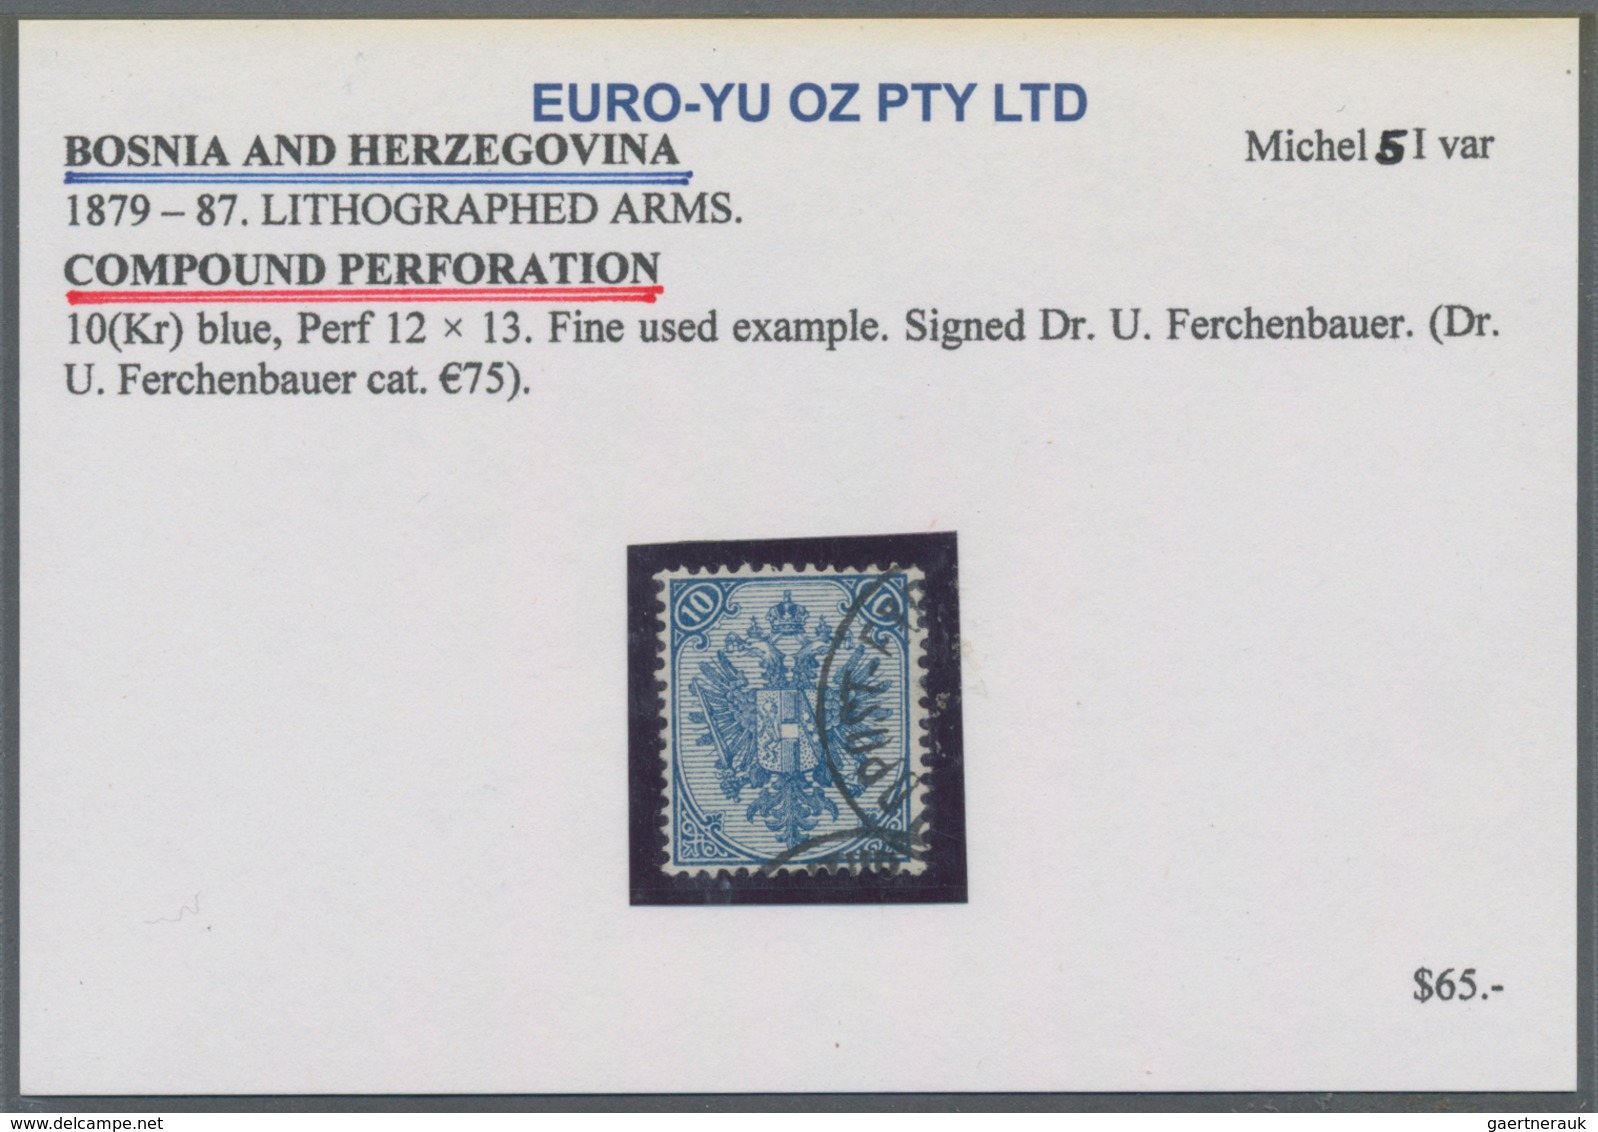 Bosnien und Herzegowina: 1879/1899, Definitives "Double Eagle", 10kr. blue, specialised assortment o